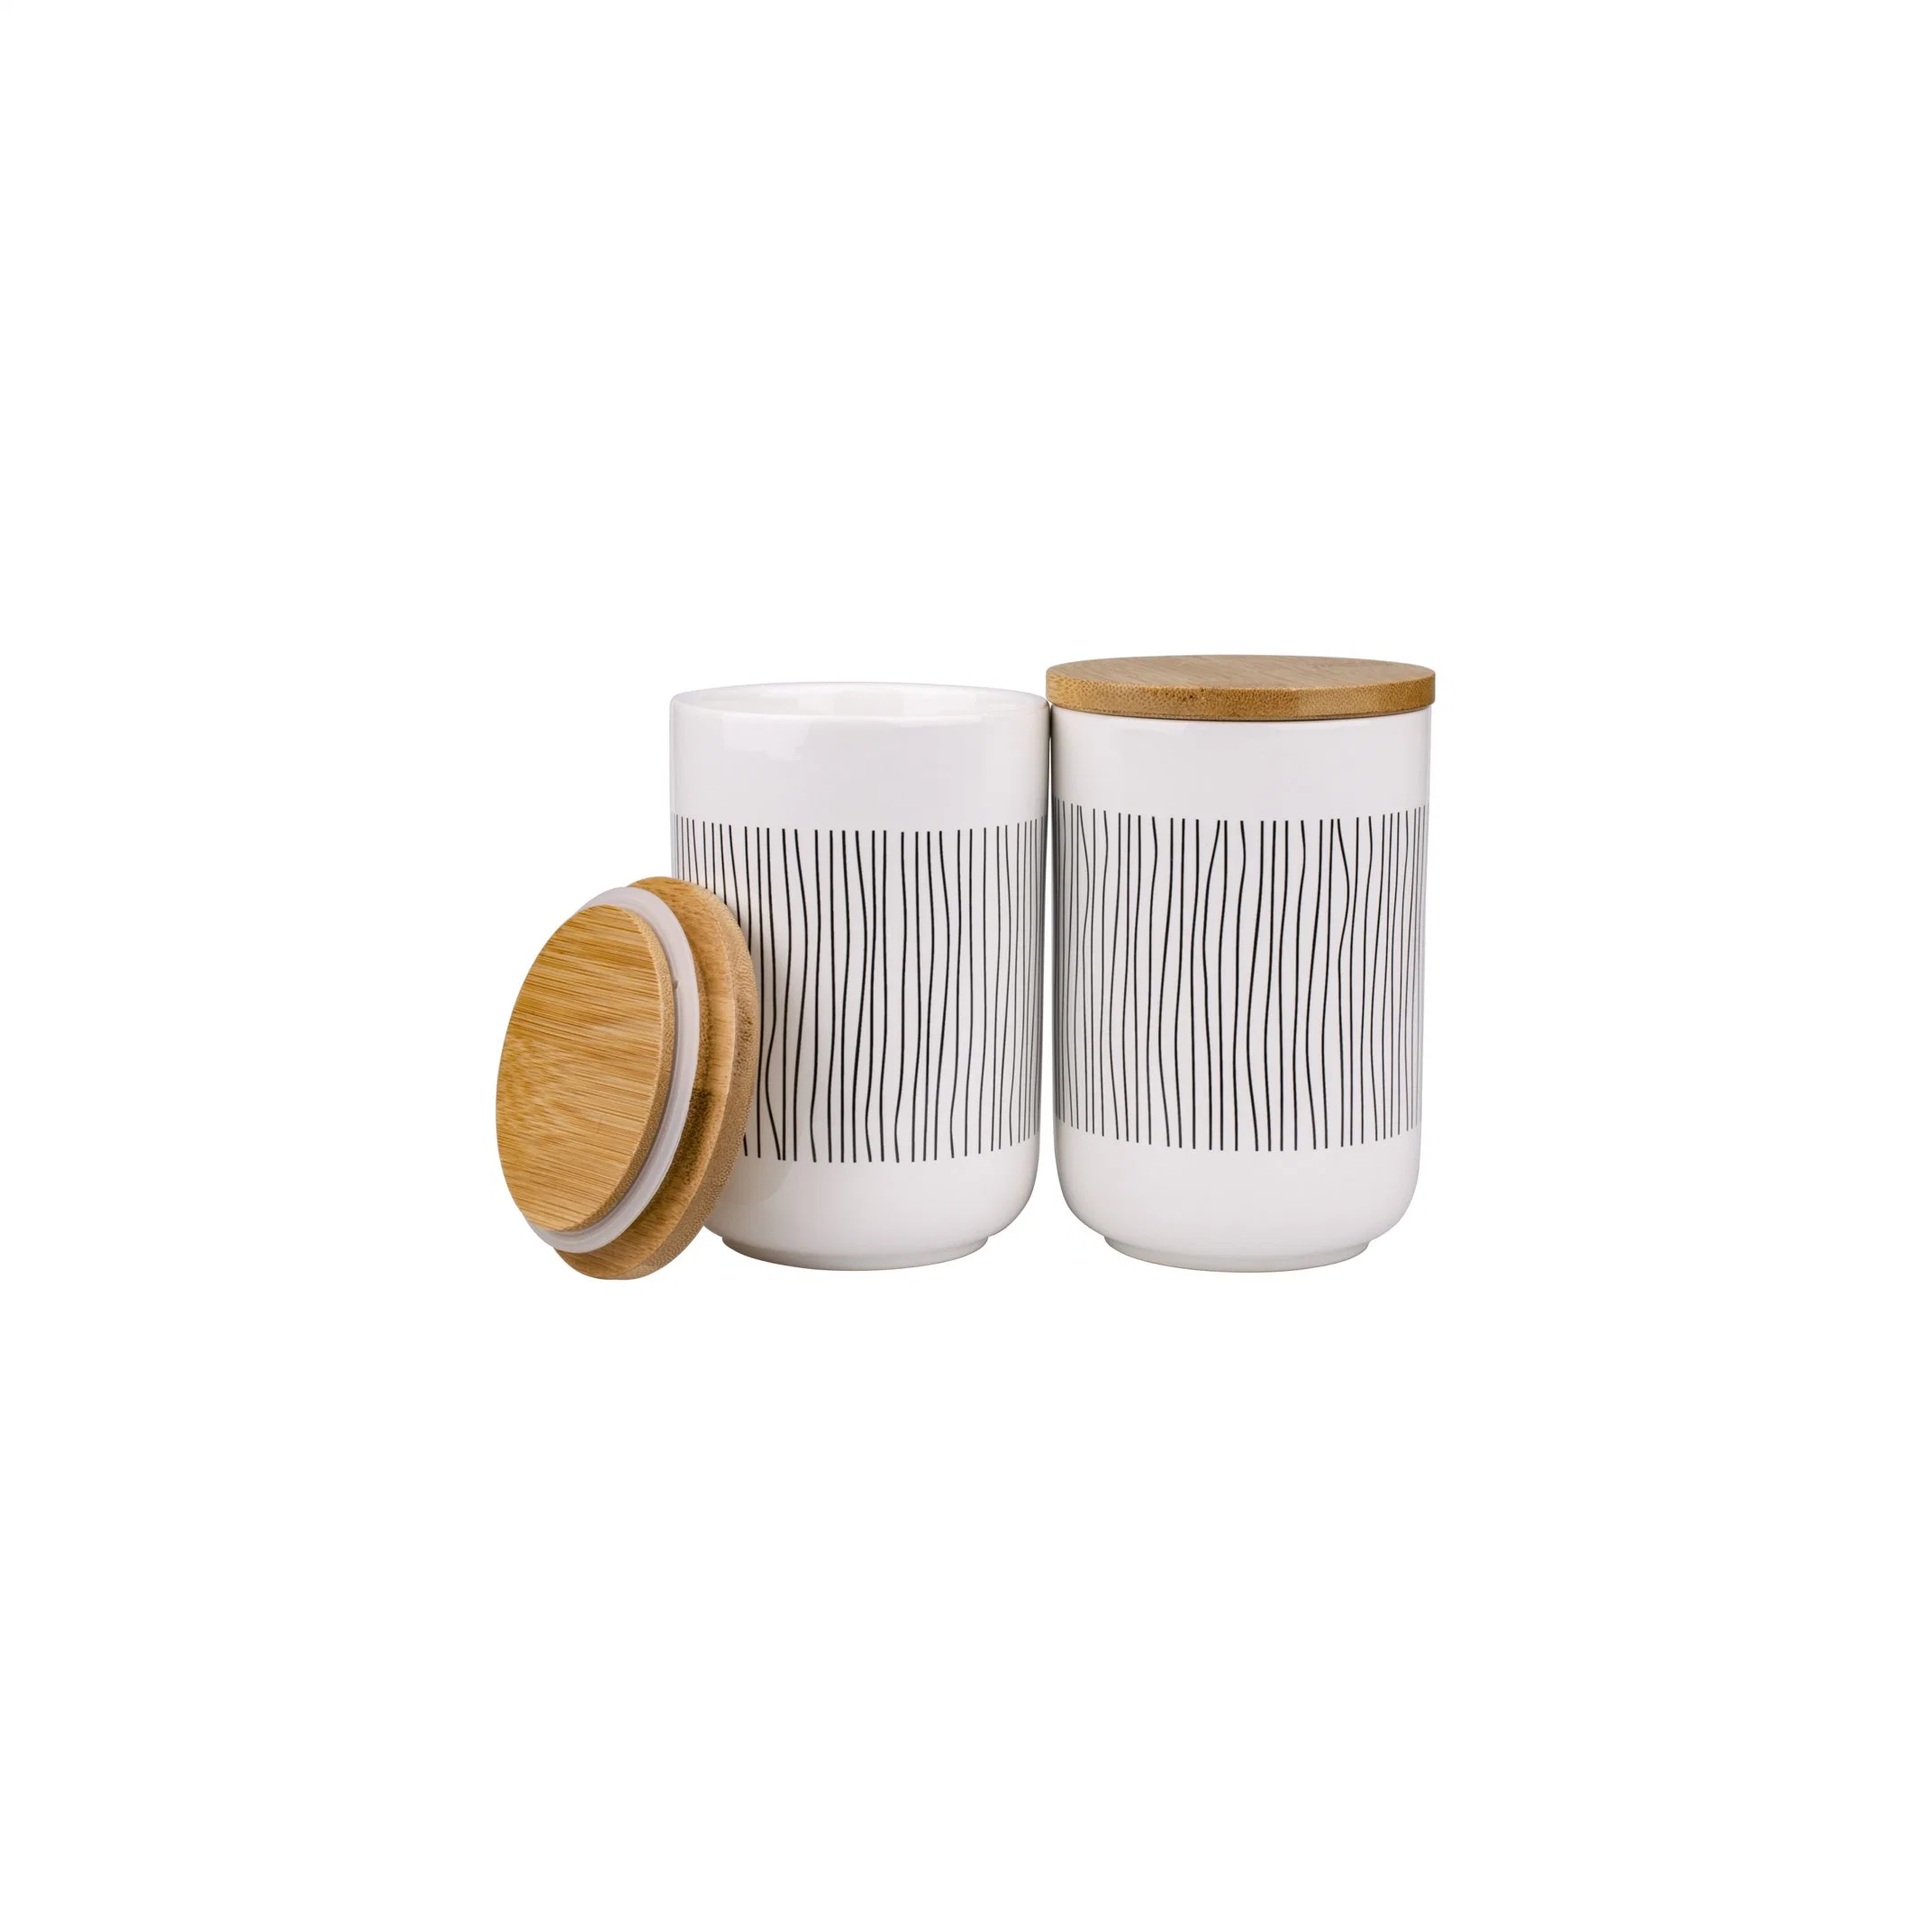 Ceramic Food Storage Jars with Bamboo Lids - 17 Oz Ceramic Canisters Storage Jars for Coffee, Sugar, Tea, Spice